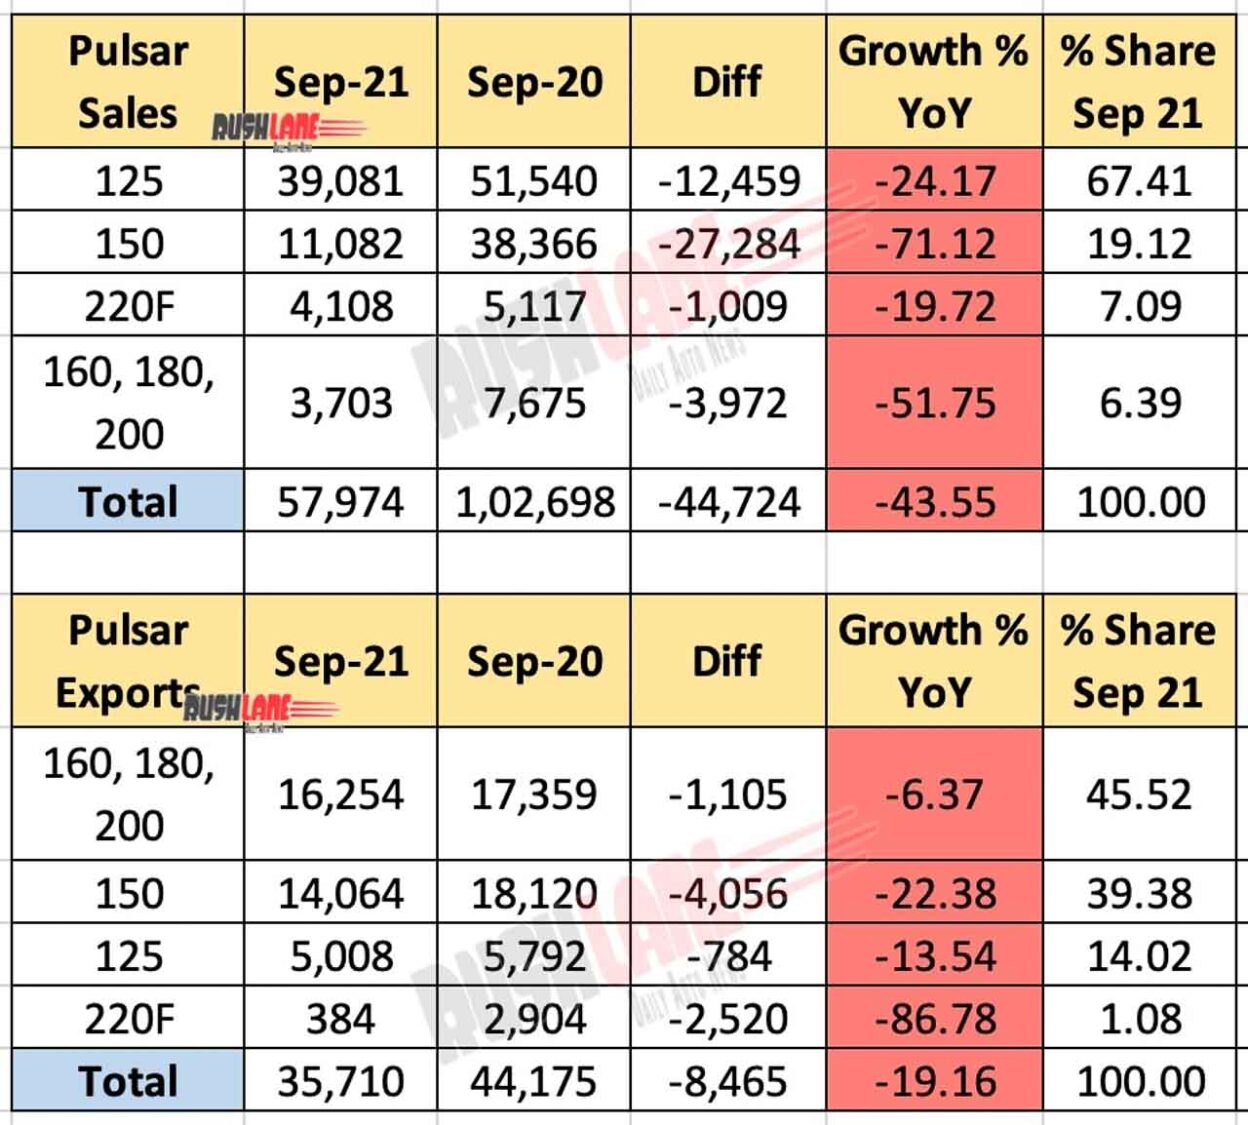 Bajaj Pulsar Sales Breakup Sep 2021 vs Sep 2020 (YoY)